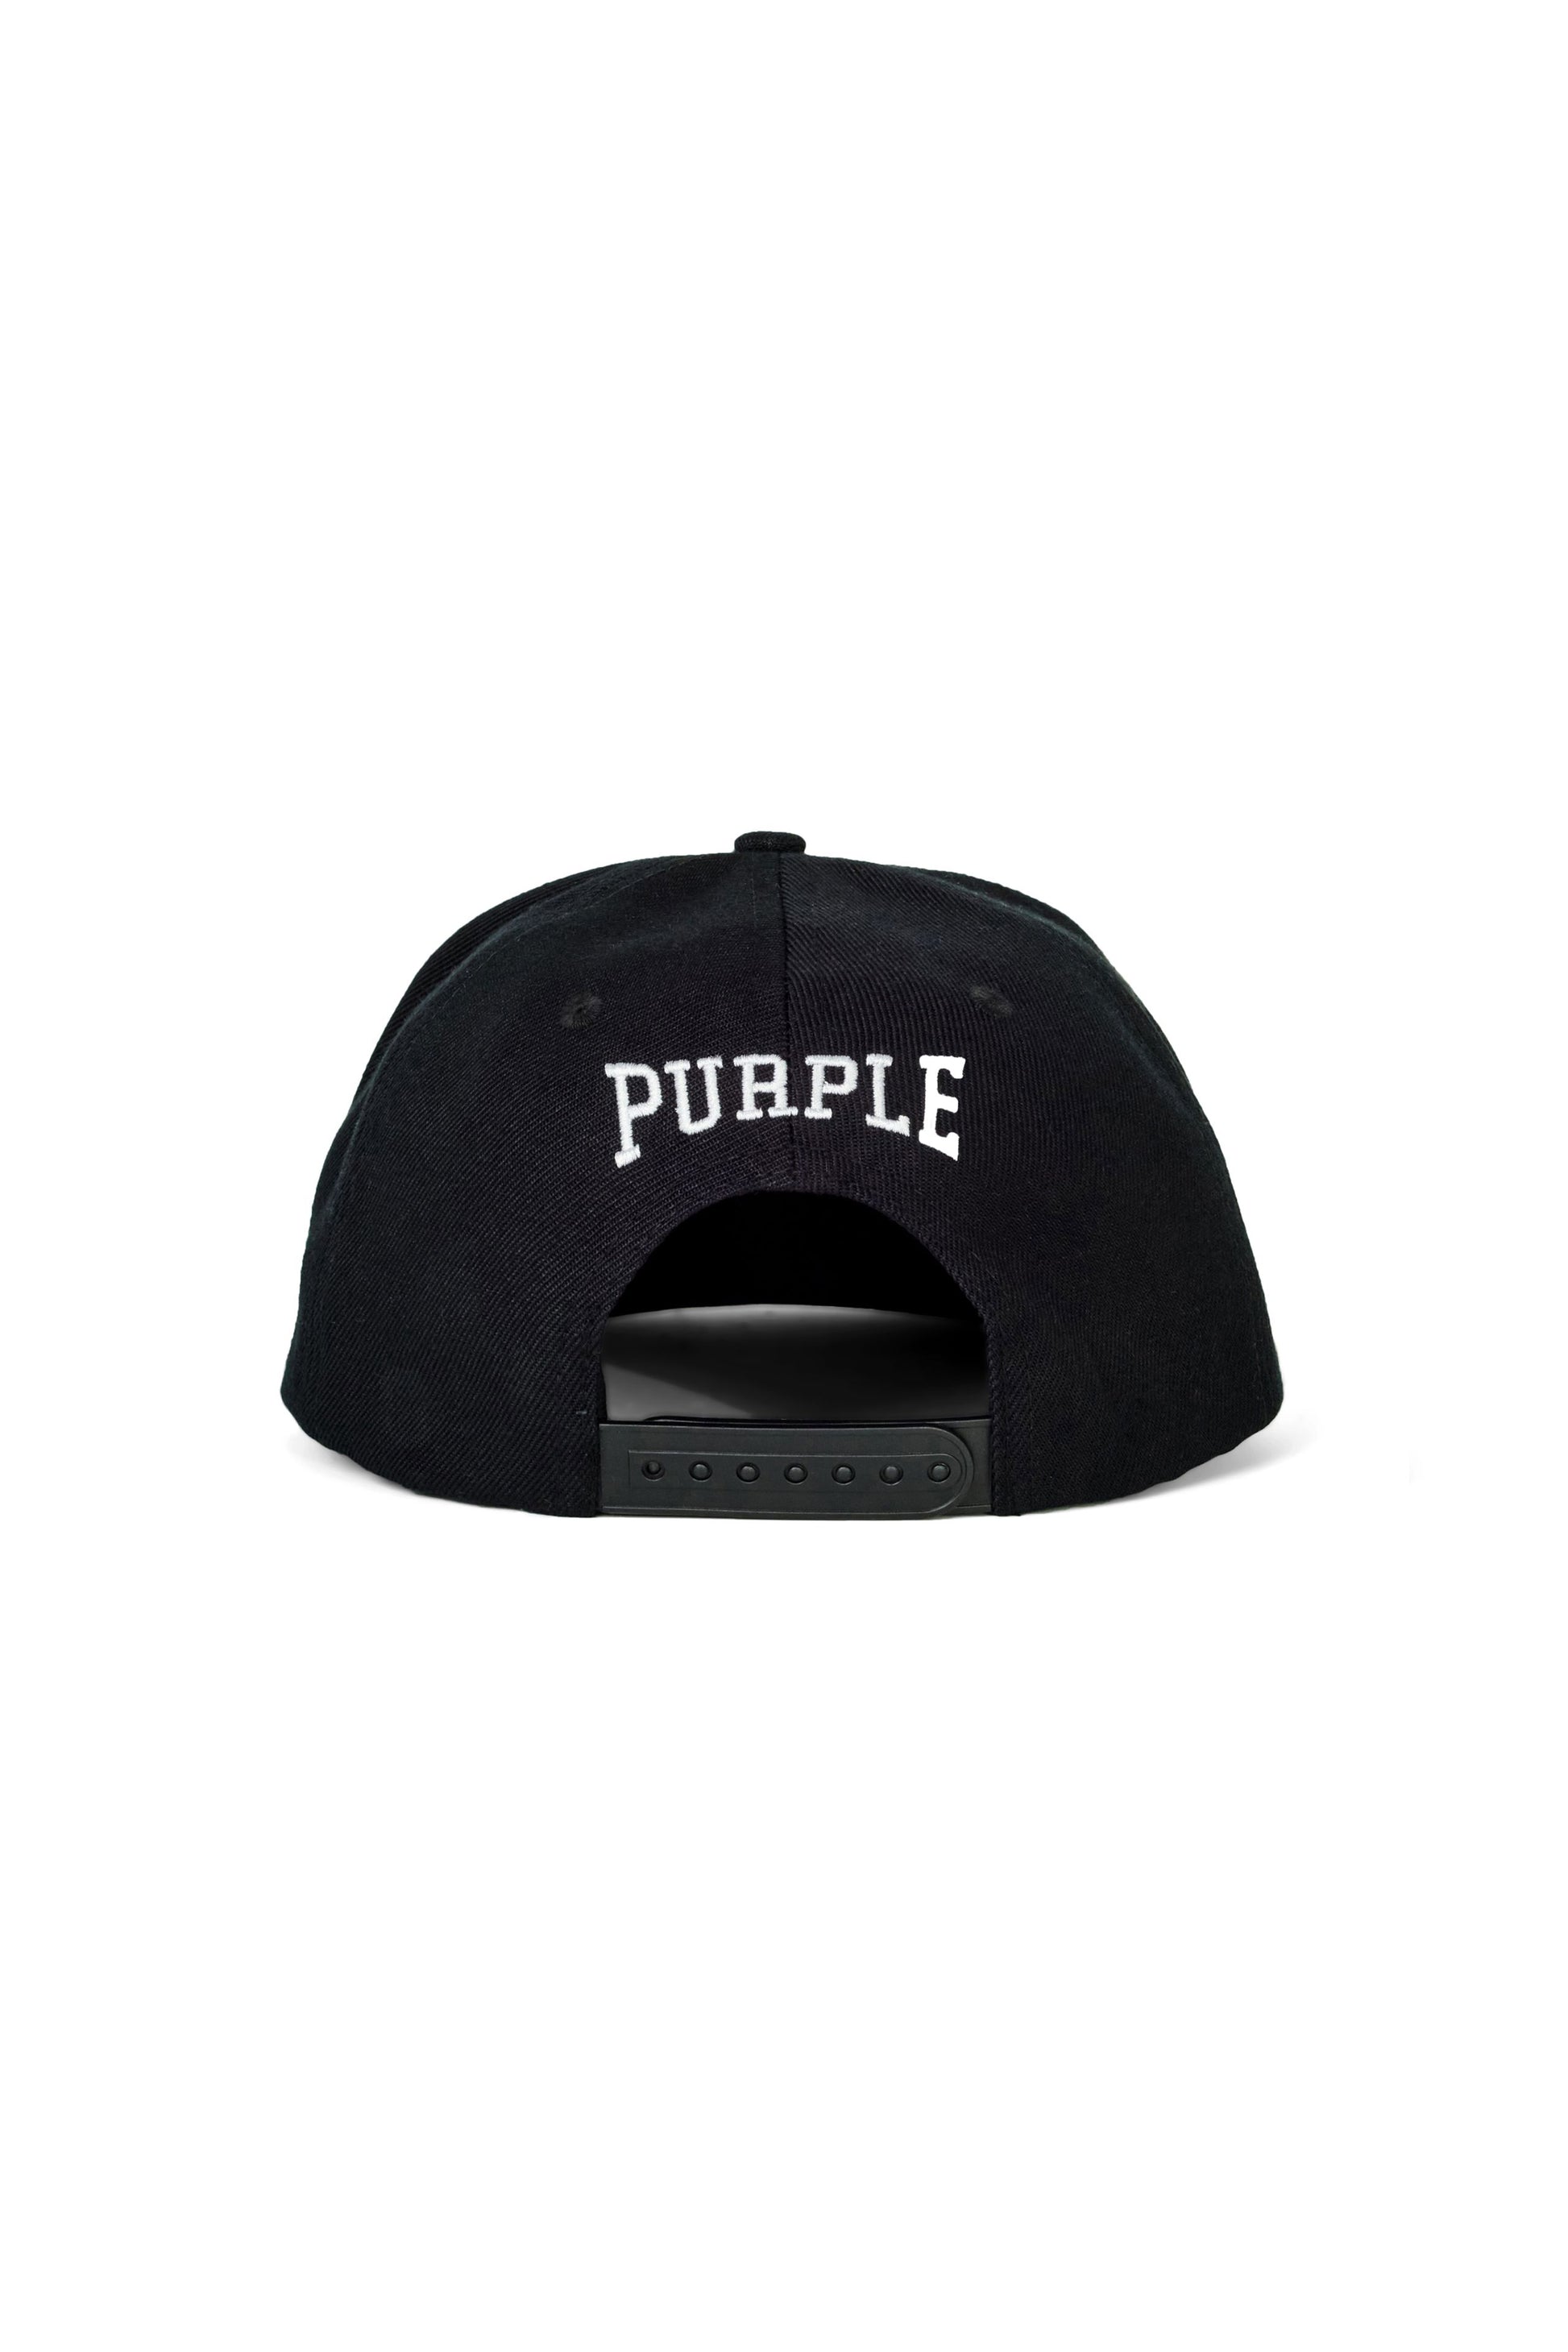 PURPLE BRAND - Panel Hat - Style No. P901 - LA Patch Black  - Back